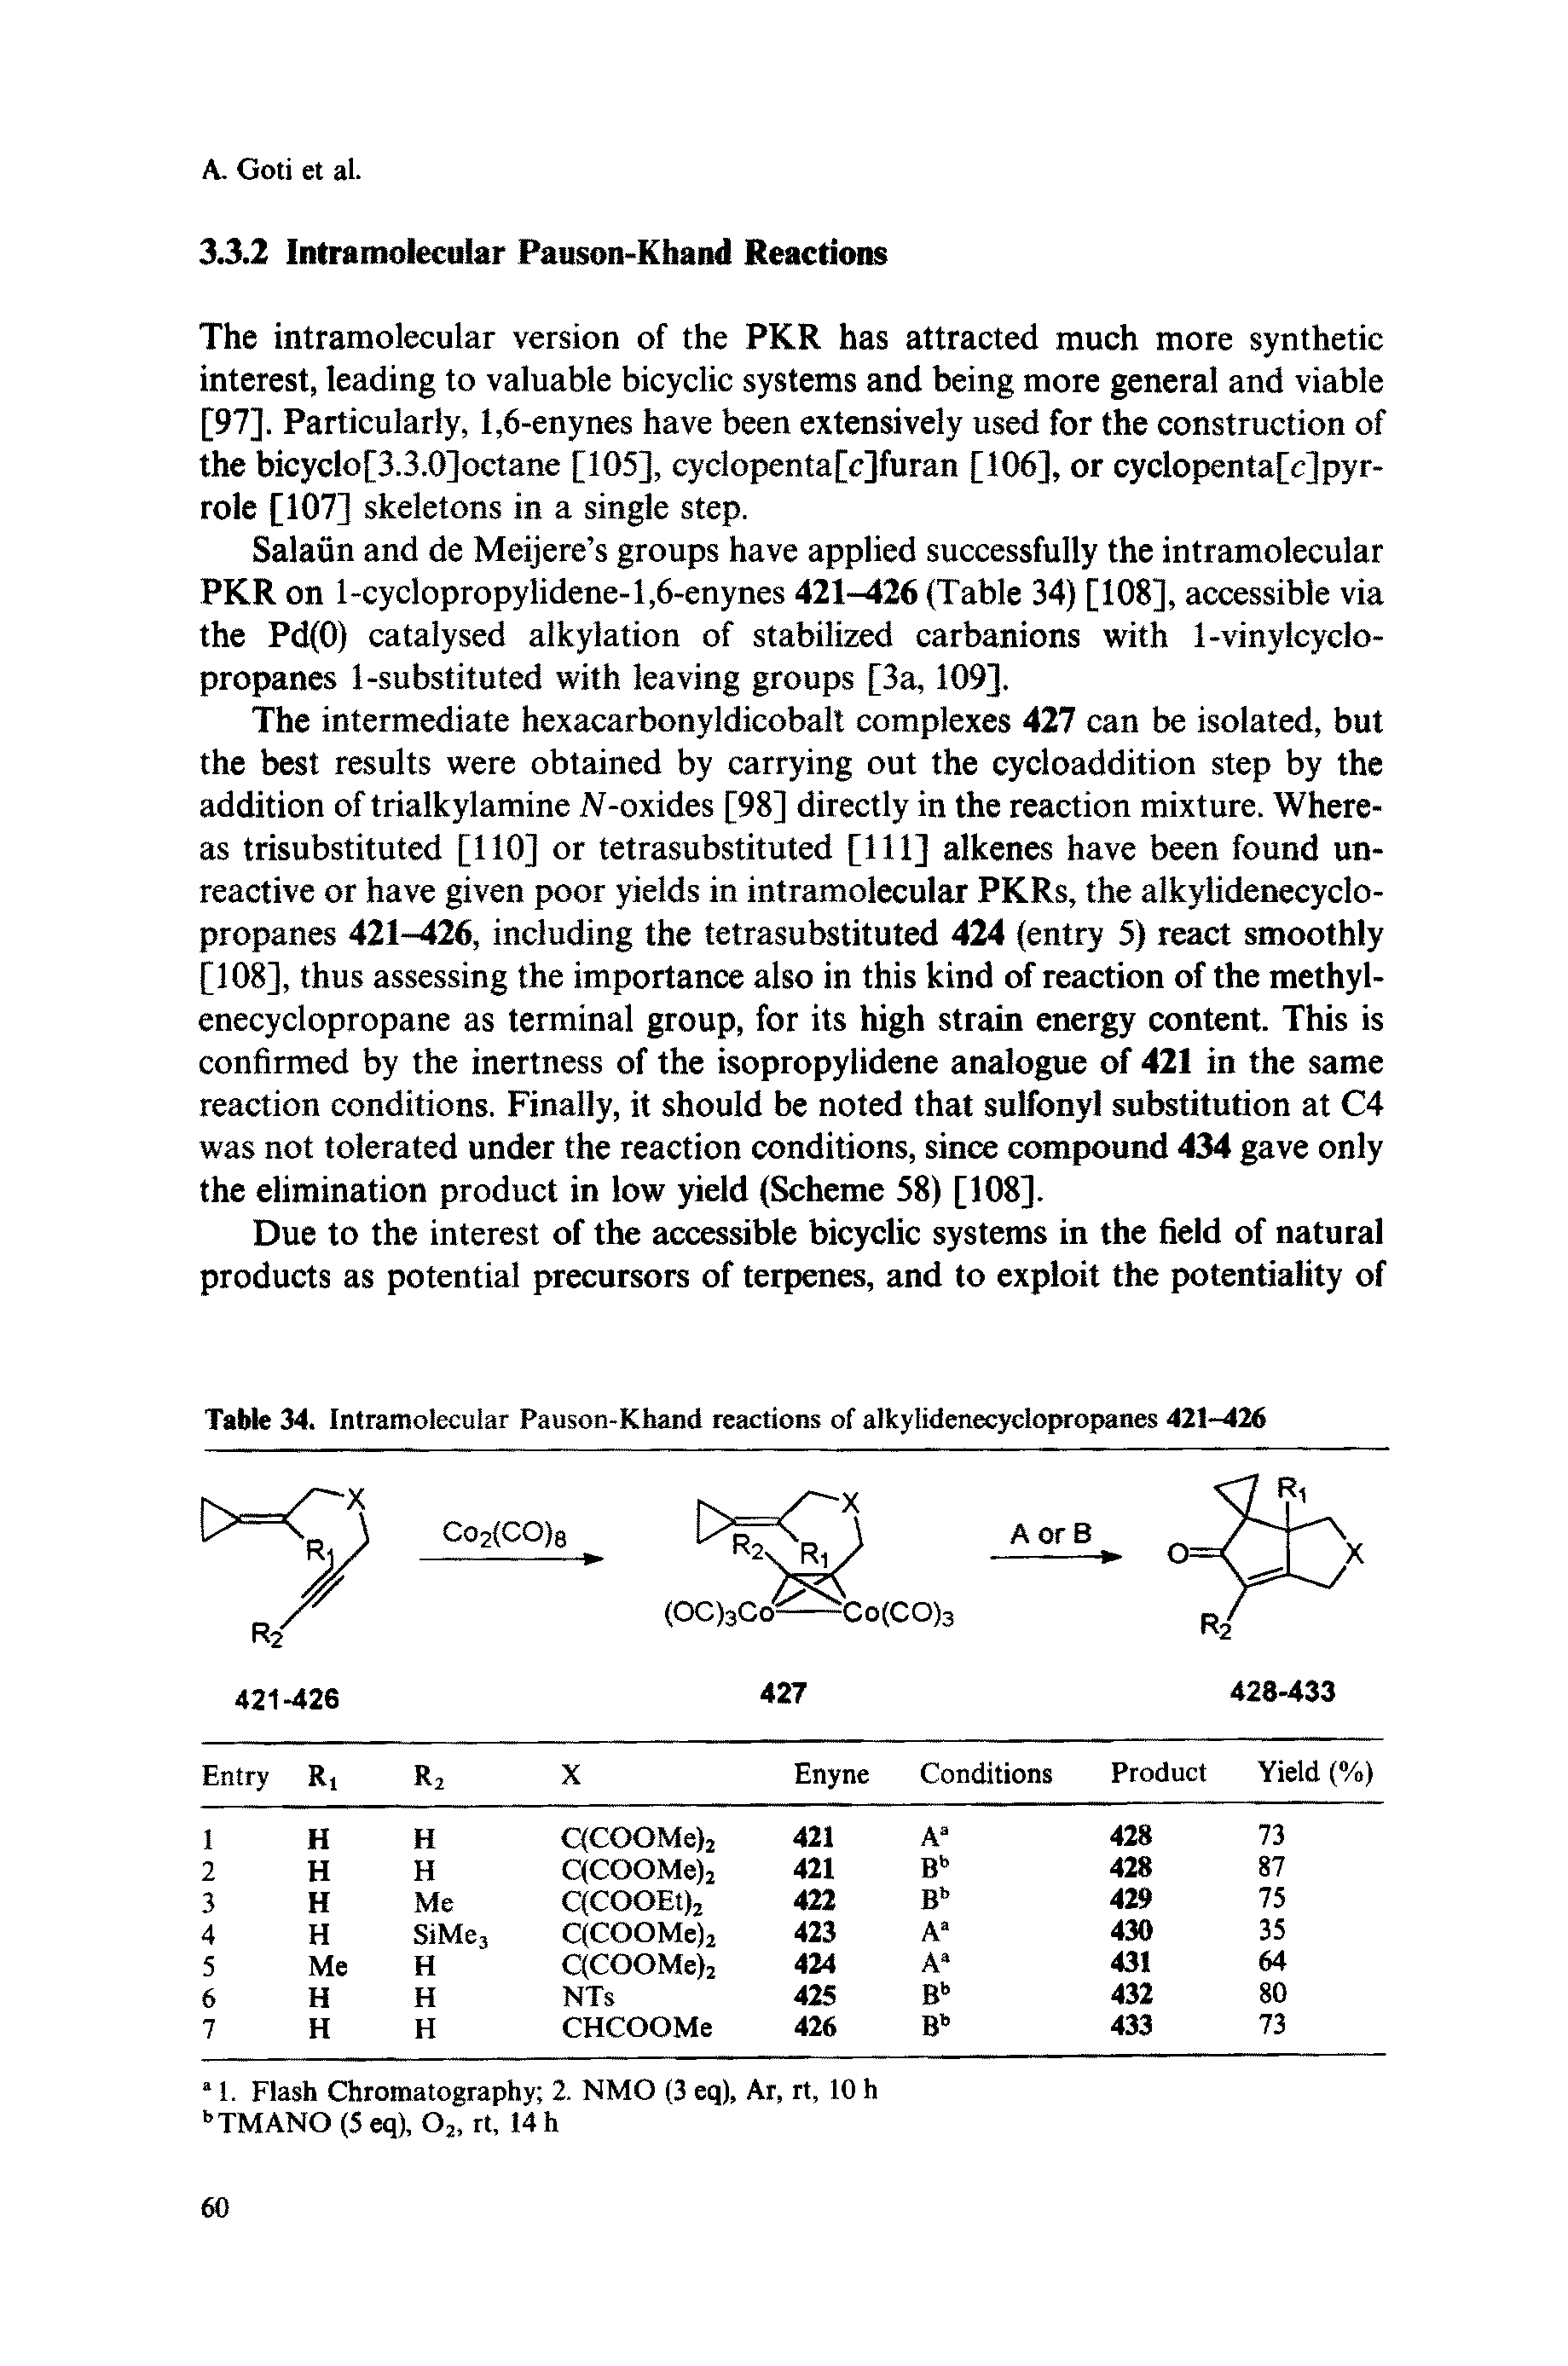 Table 34. Intramolecular Pauson-Khand reactions of alkylidenecyelopropanes 421-426...